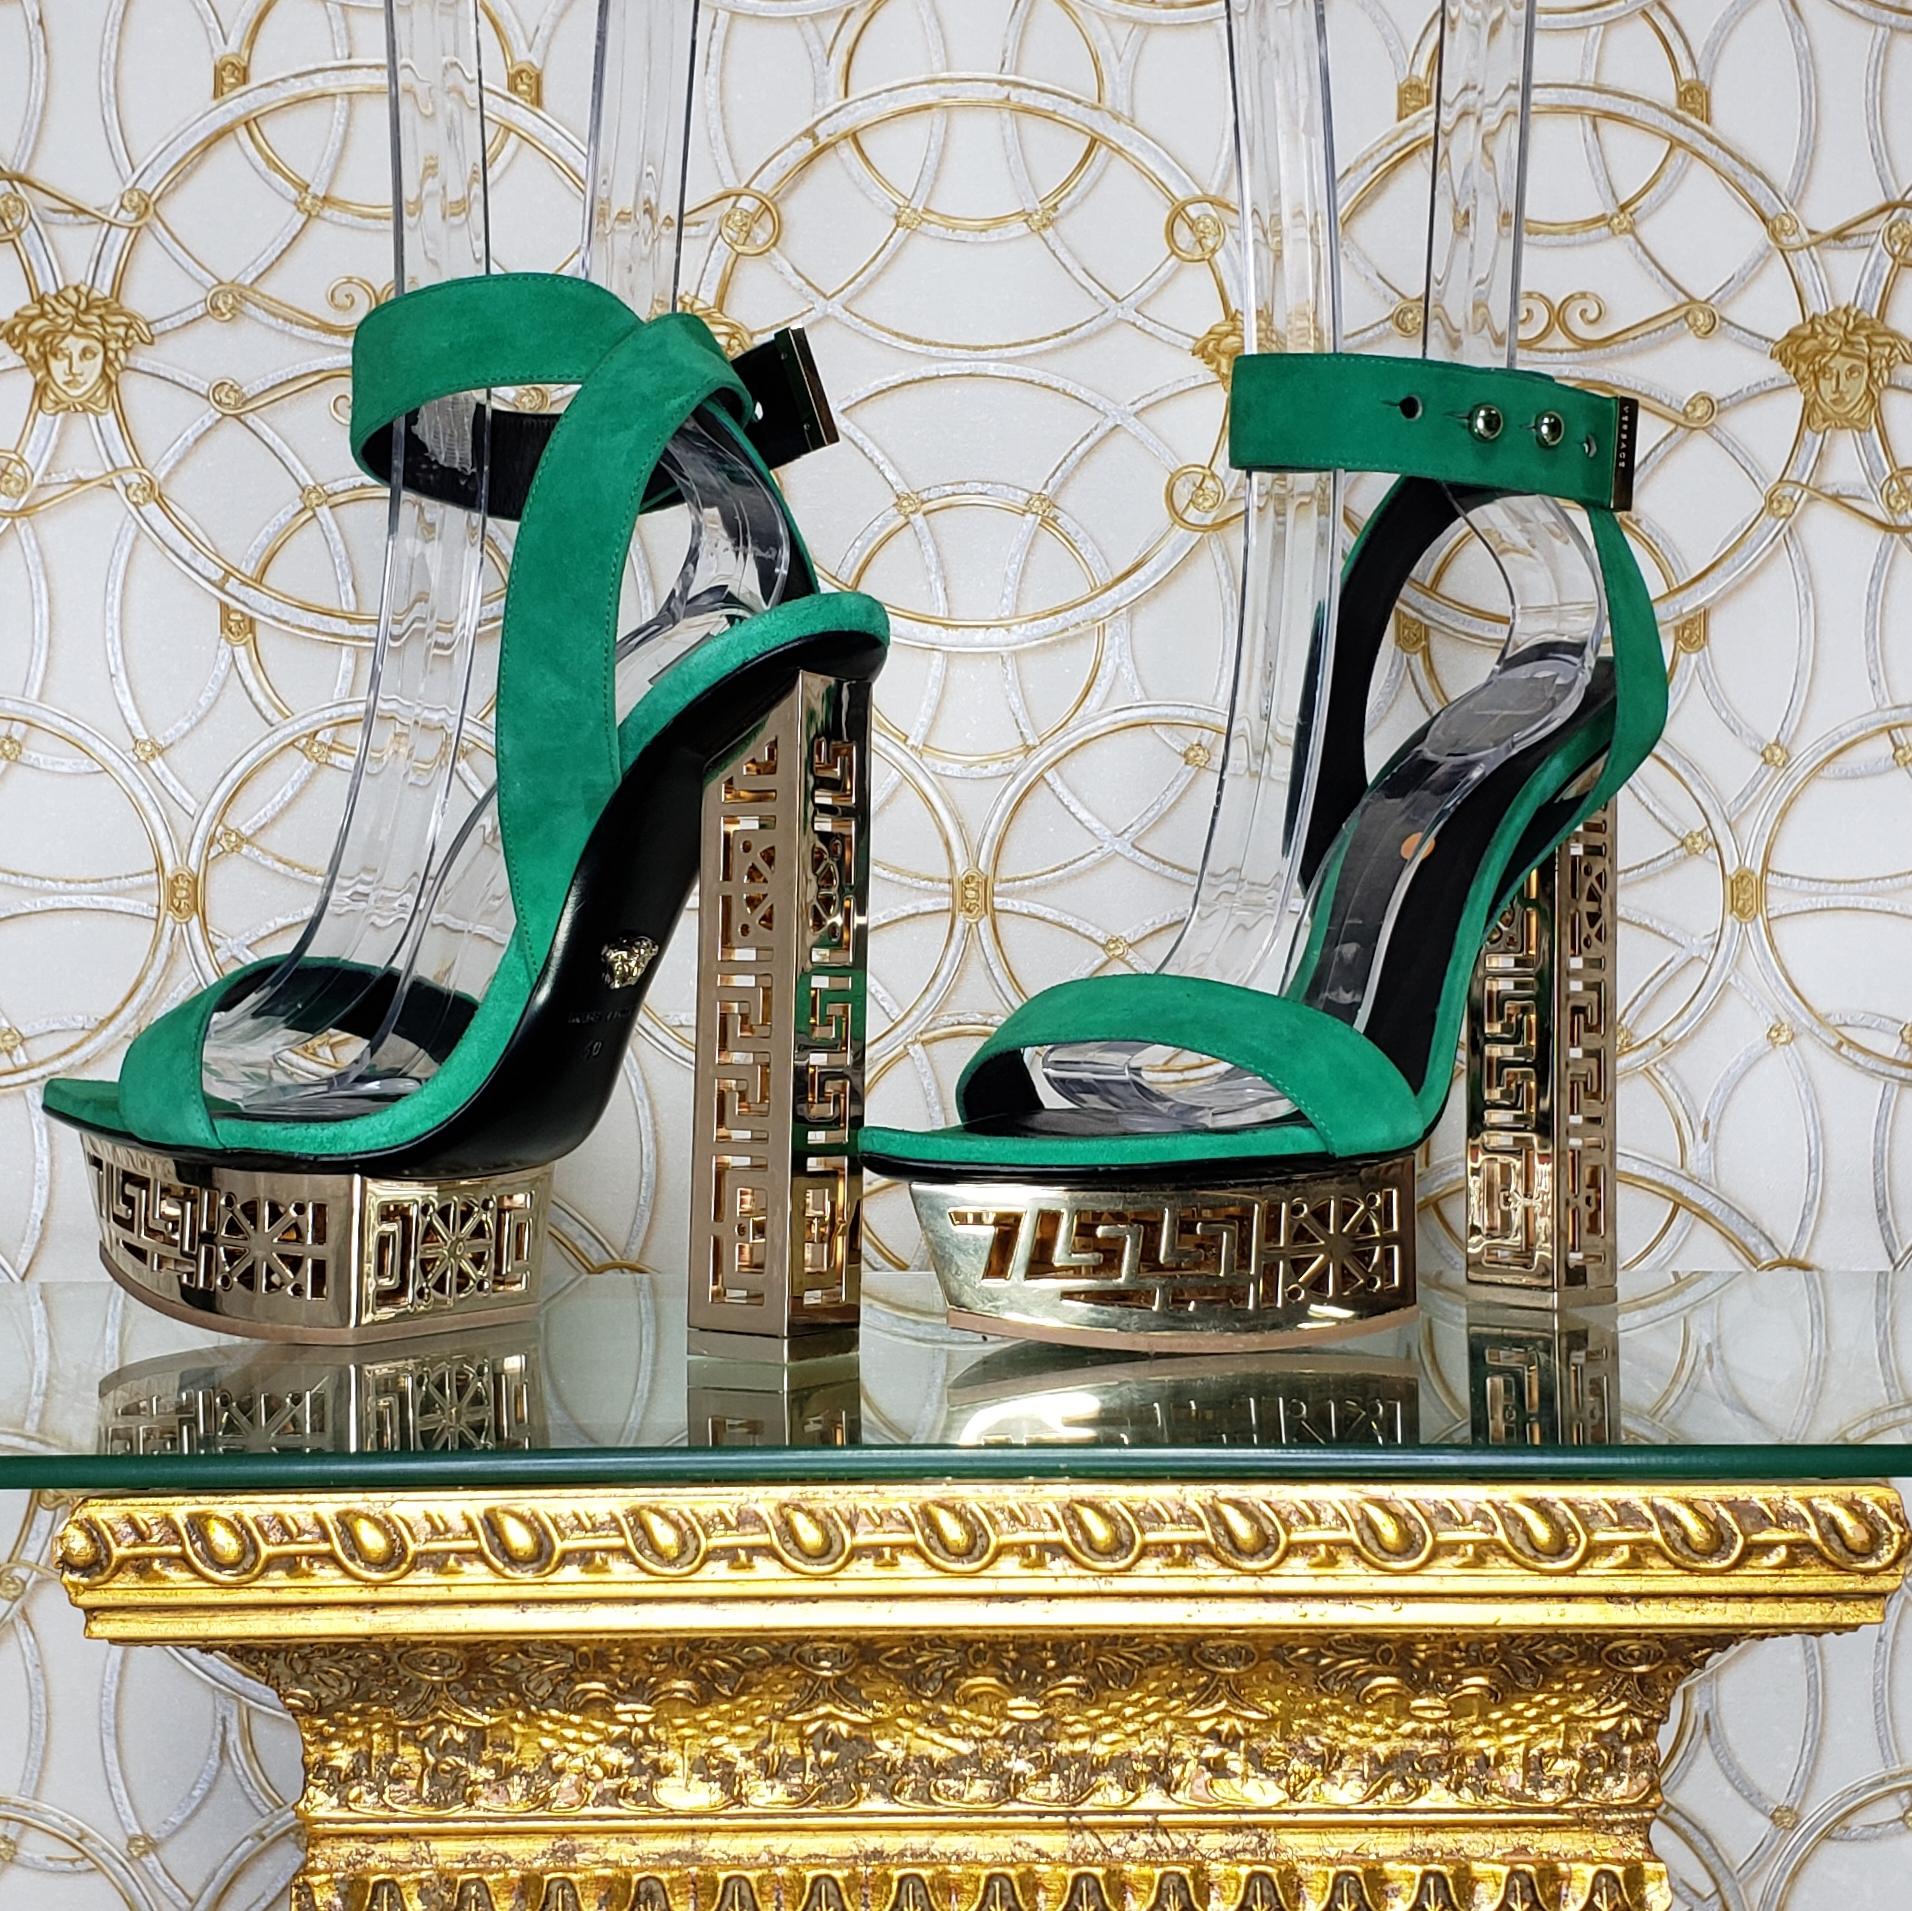 green platform shoes